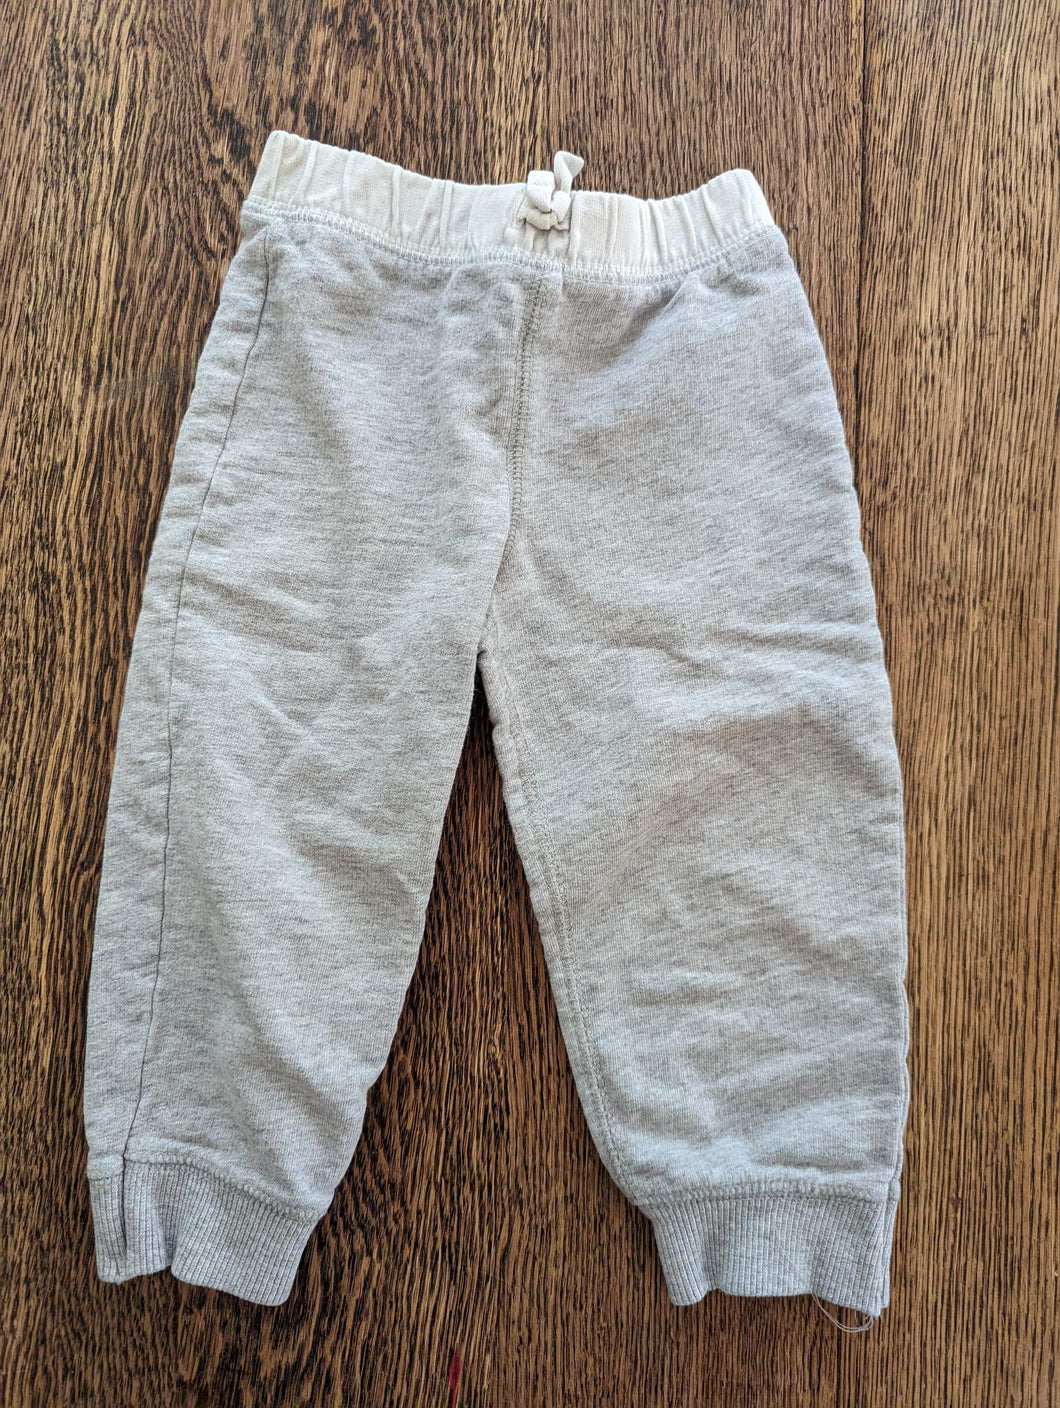 Carters Grey Sweatpants 18 mo